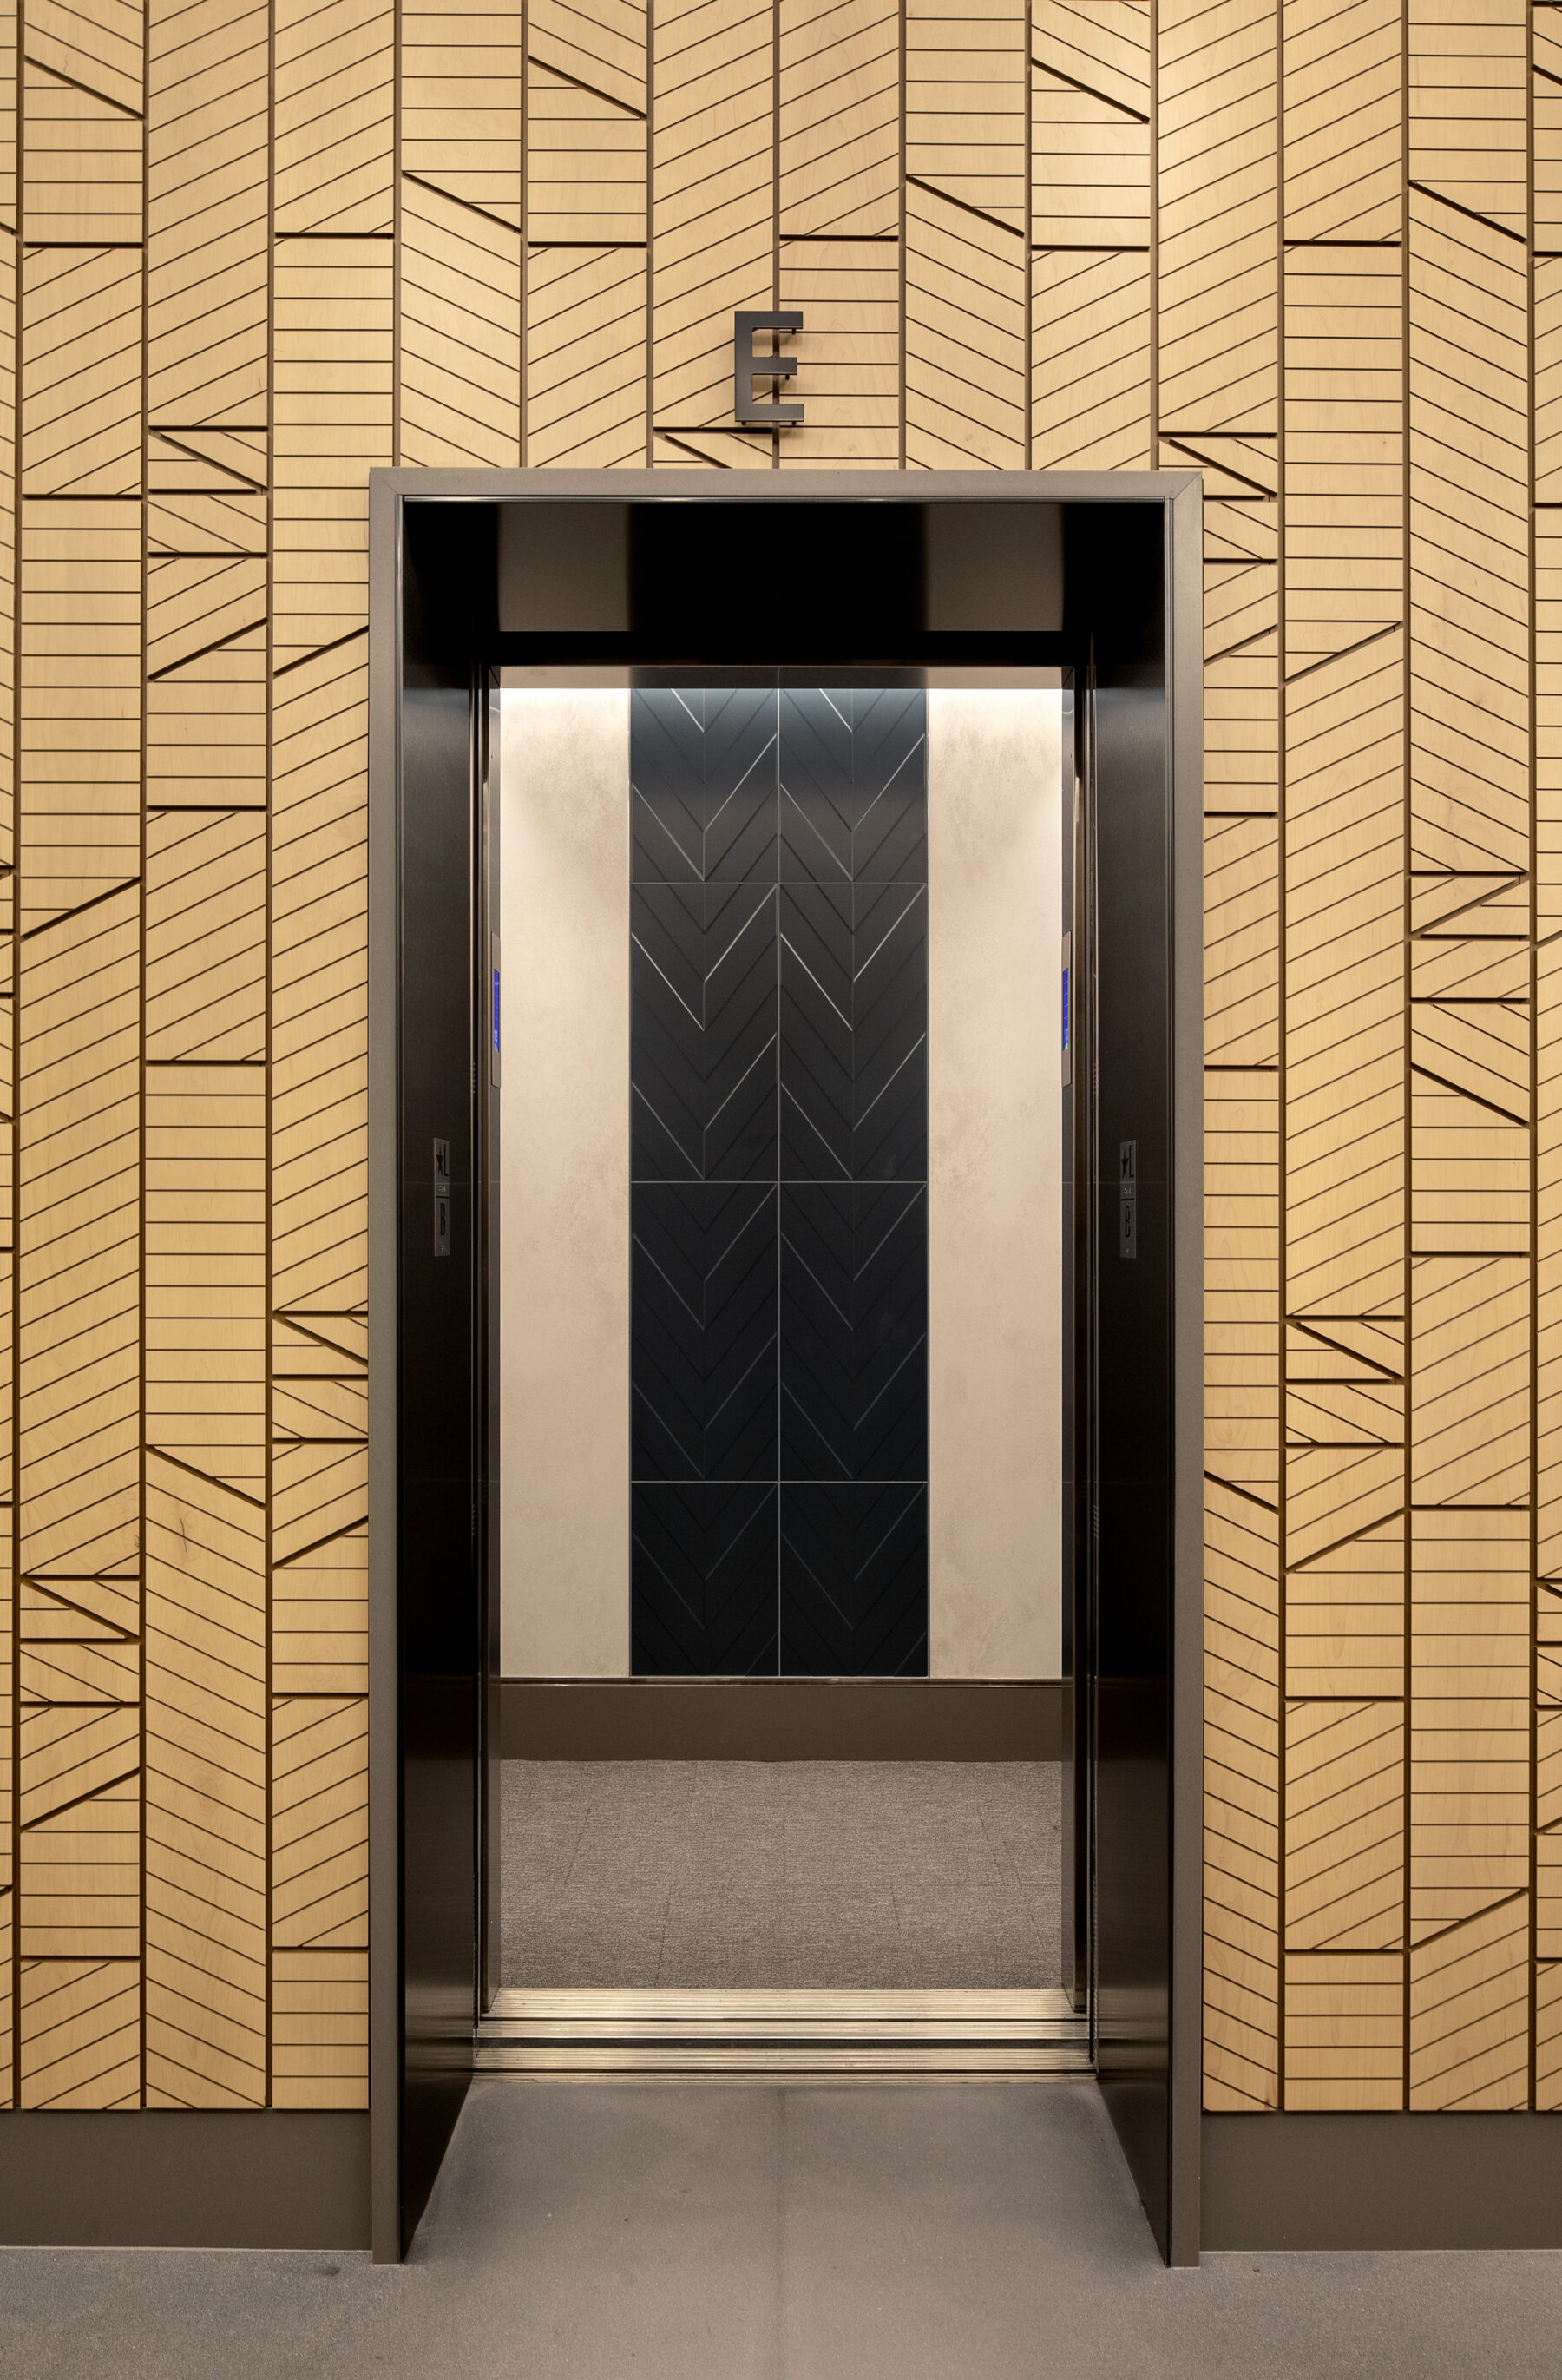 detail photograph of geometric wood panelling around elevator core